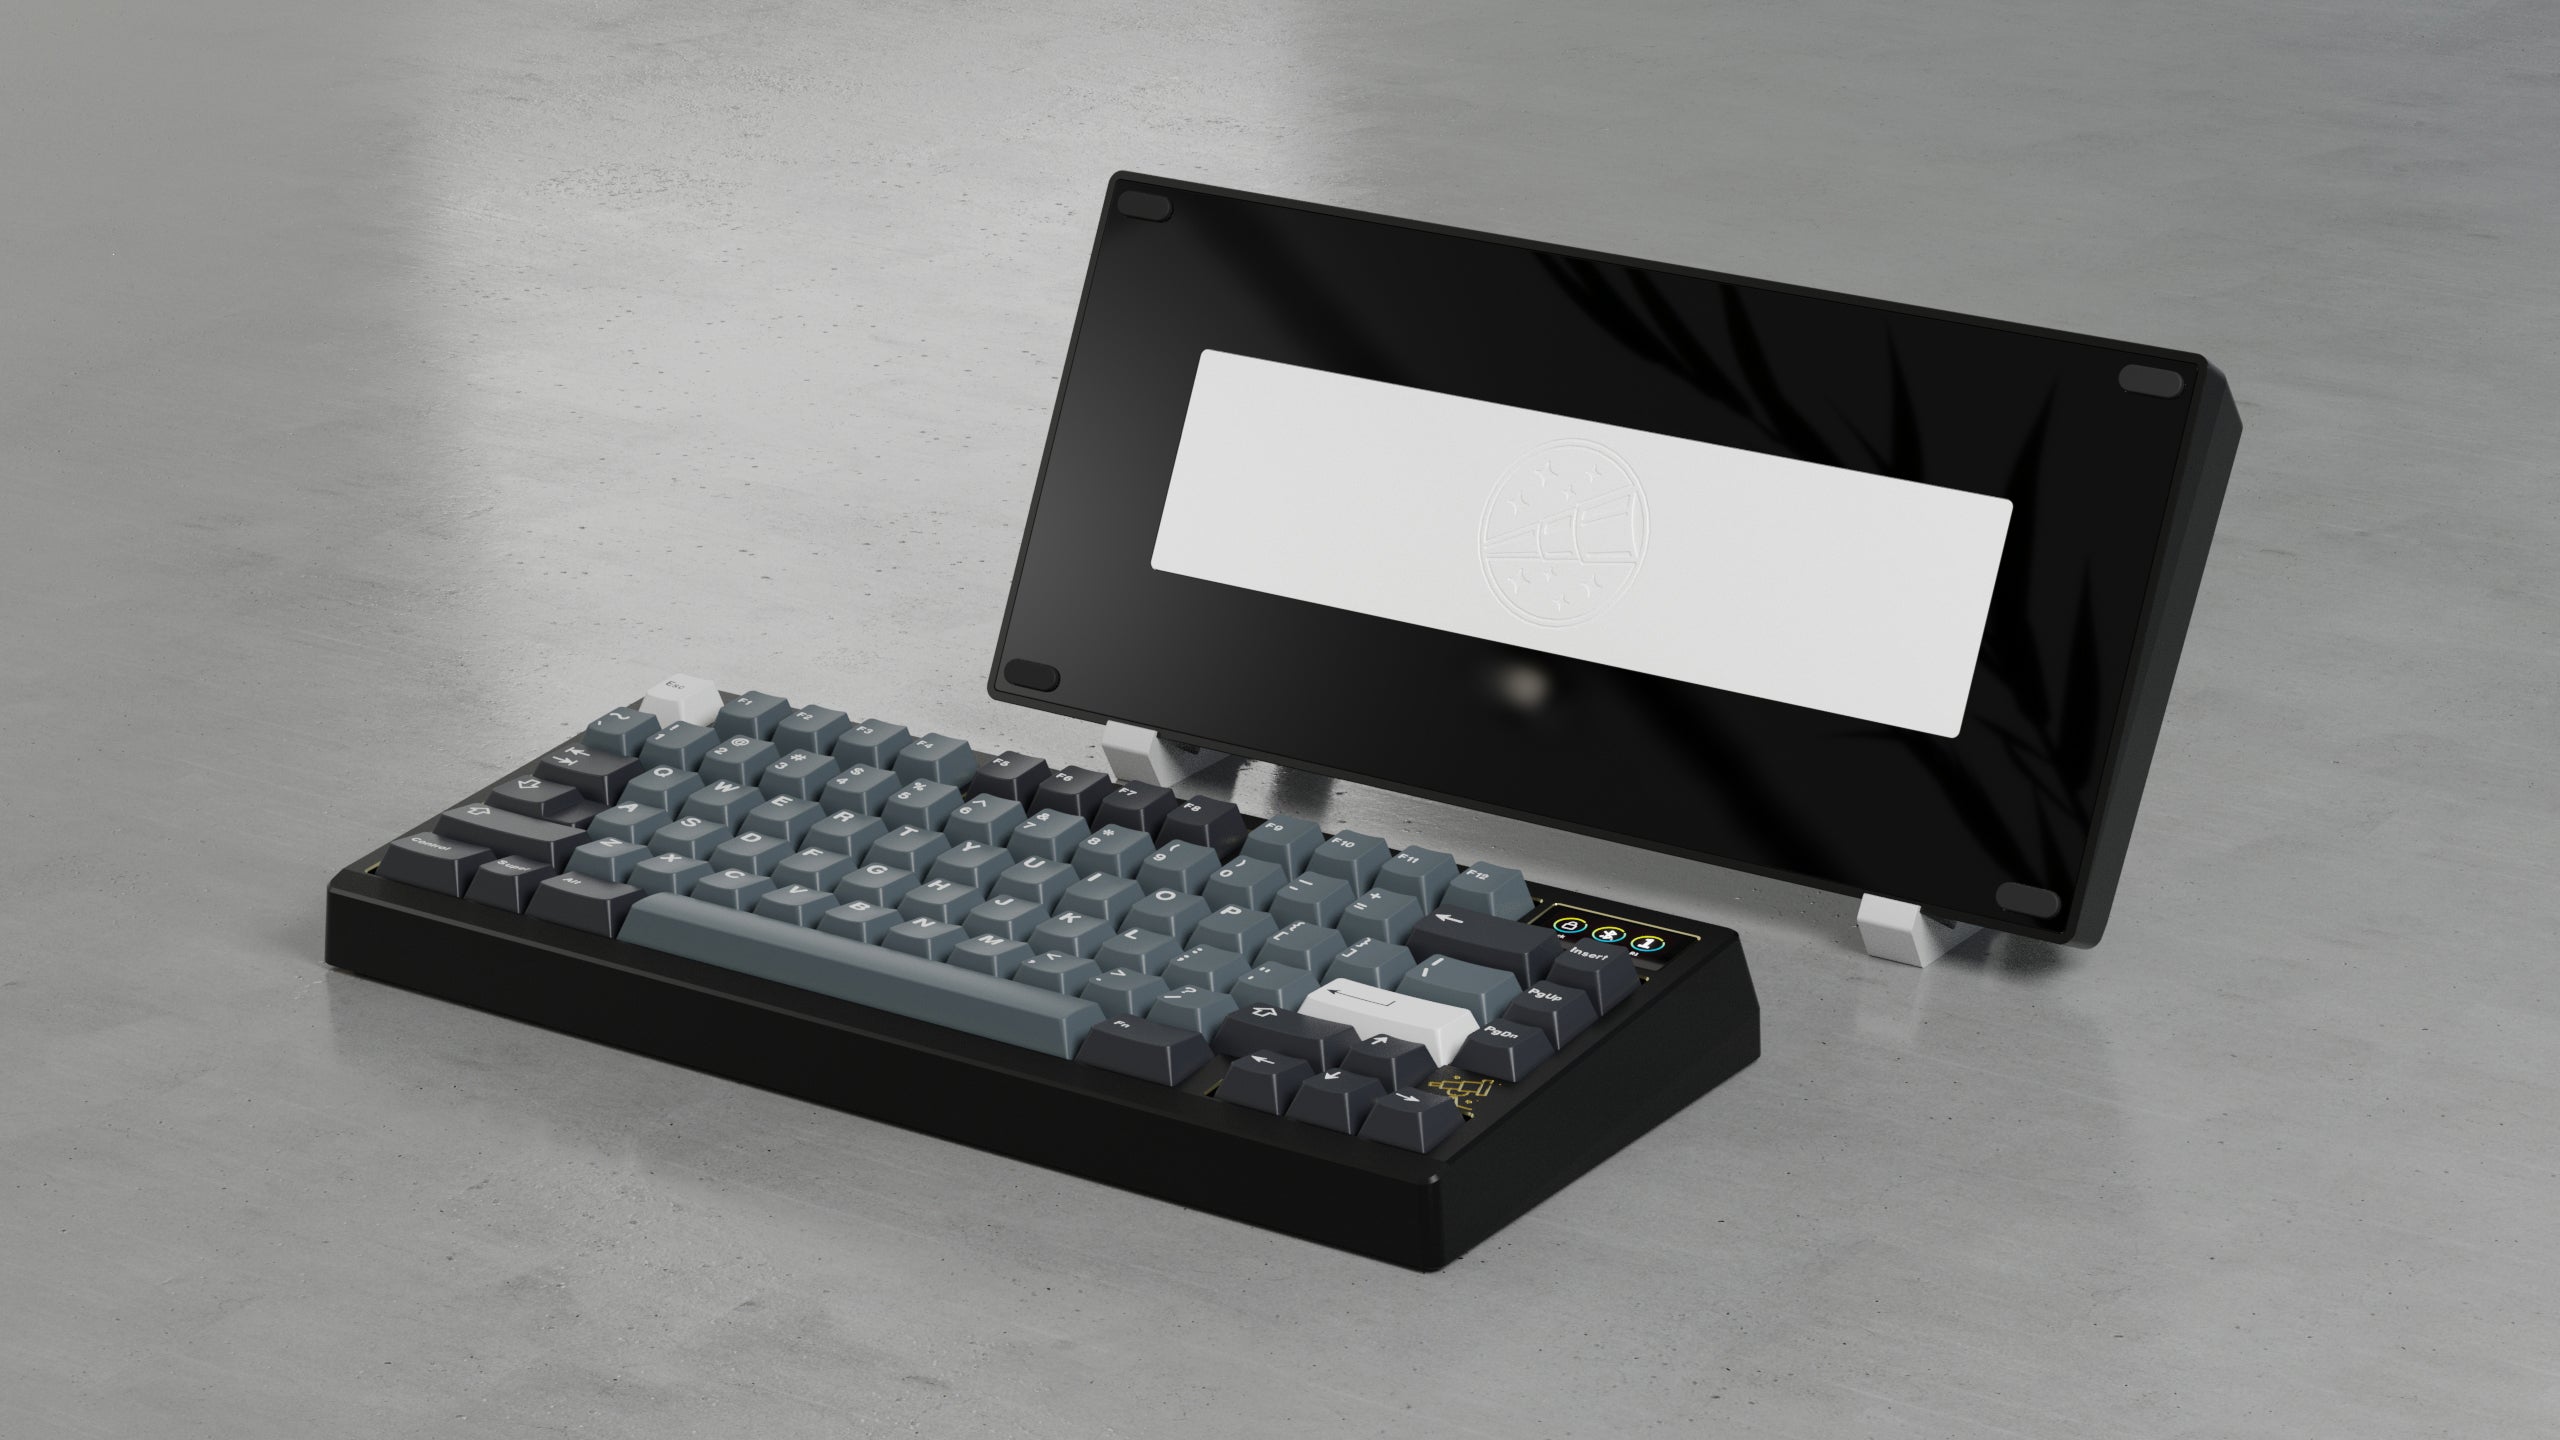 Zoom75 SE Keyboard - Anodized Black [Preorder]